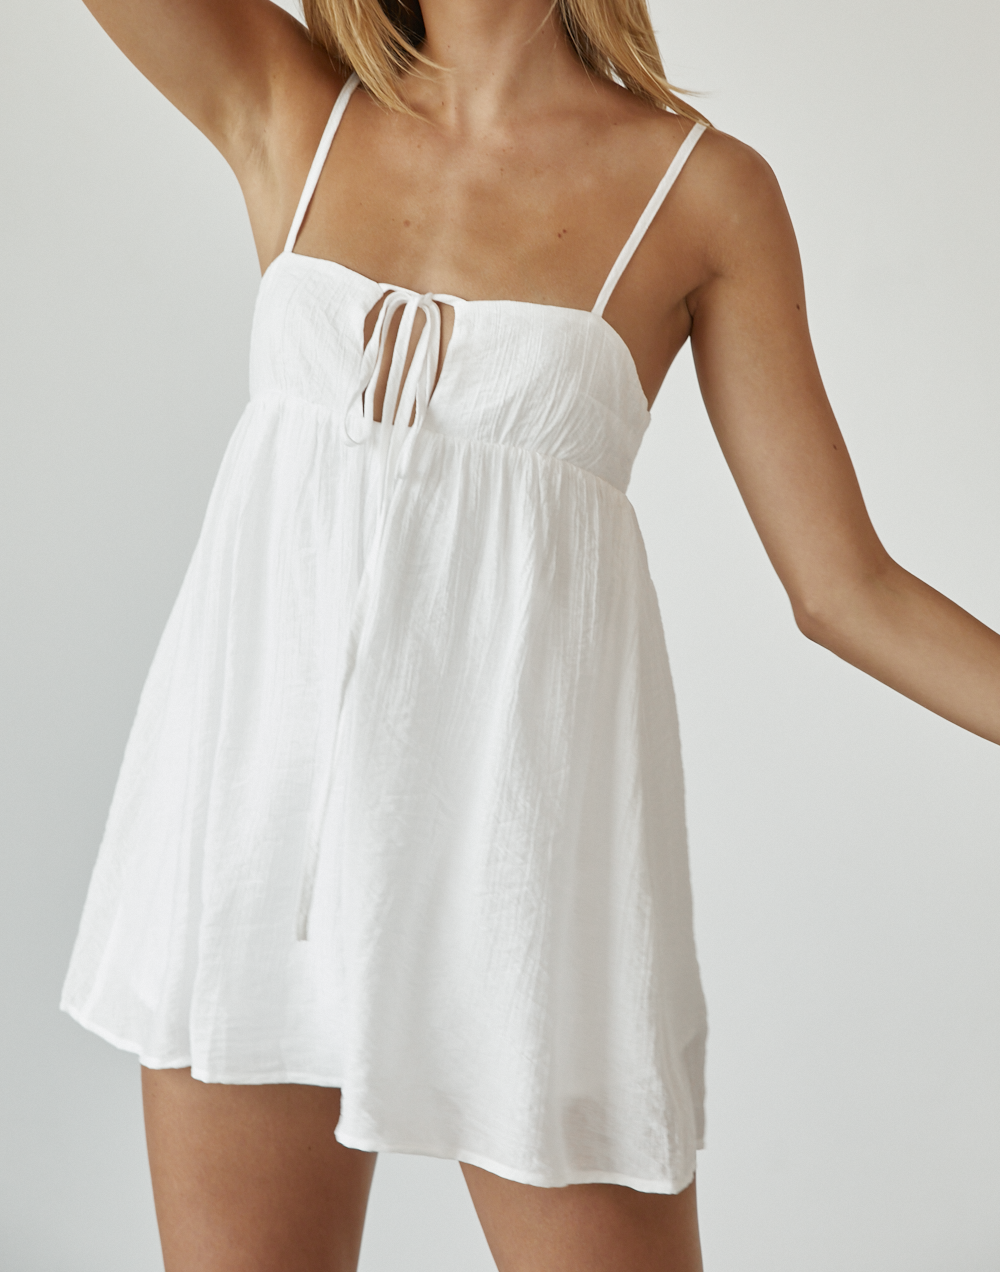 Berlin Mini Dress (White) - White Summer Mini Dress - Women's Dress - Charcoal Clothing